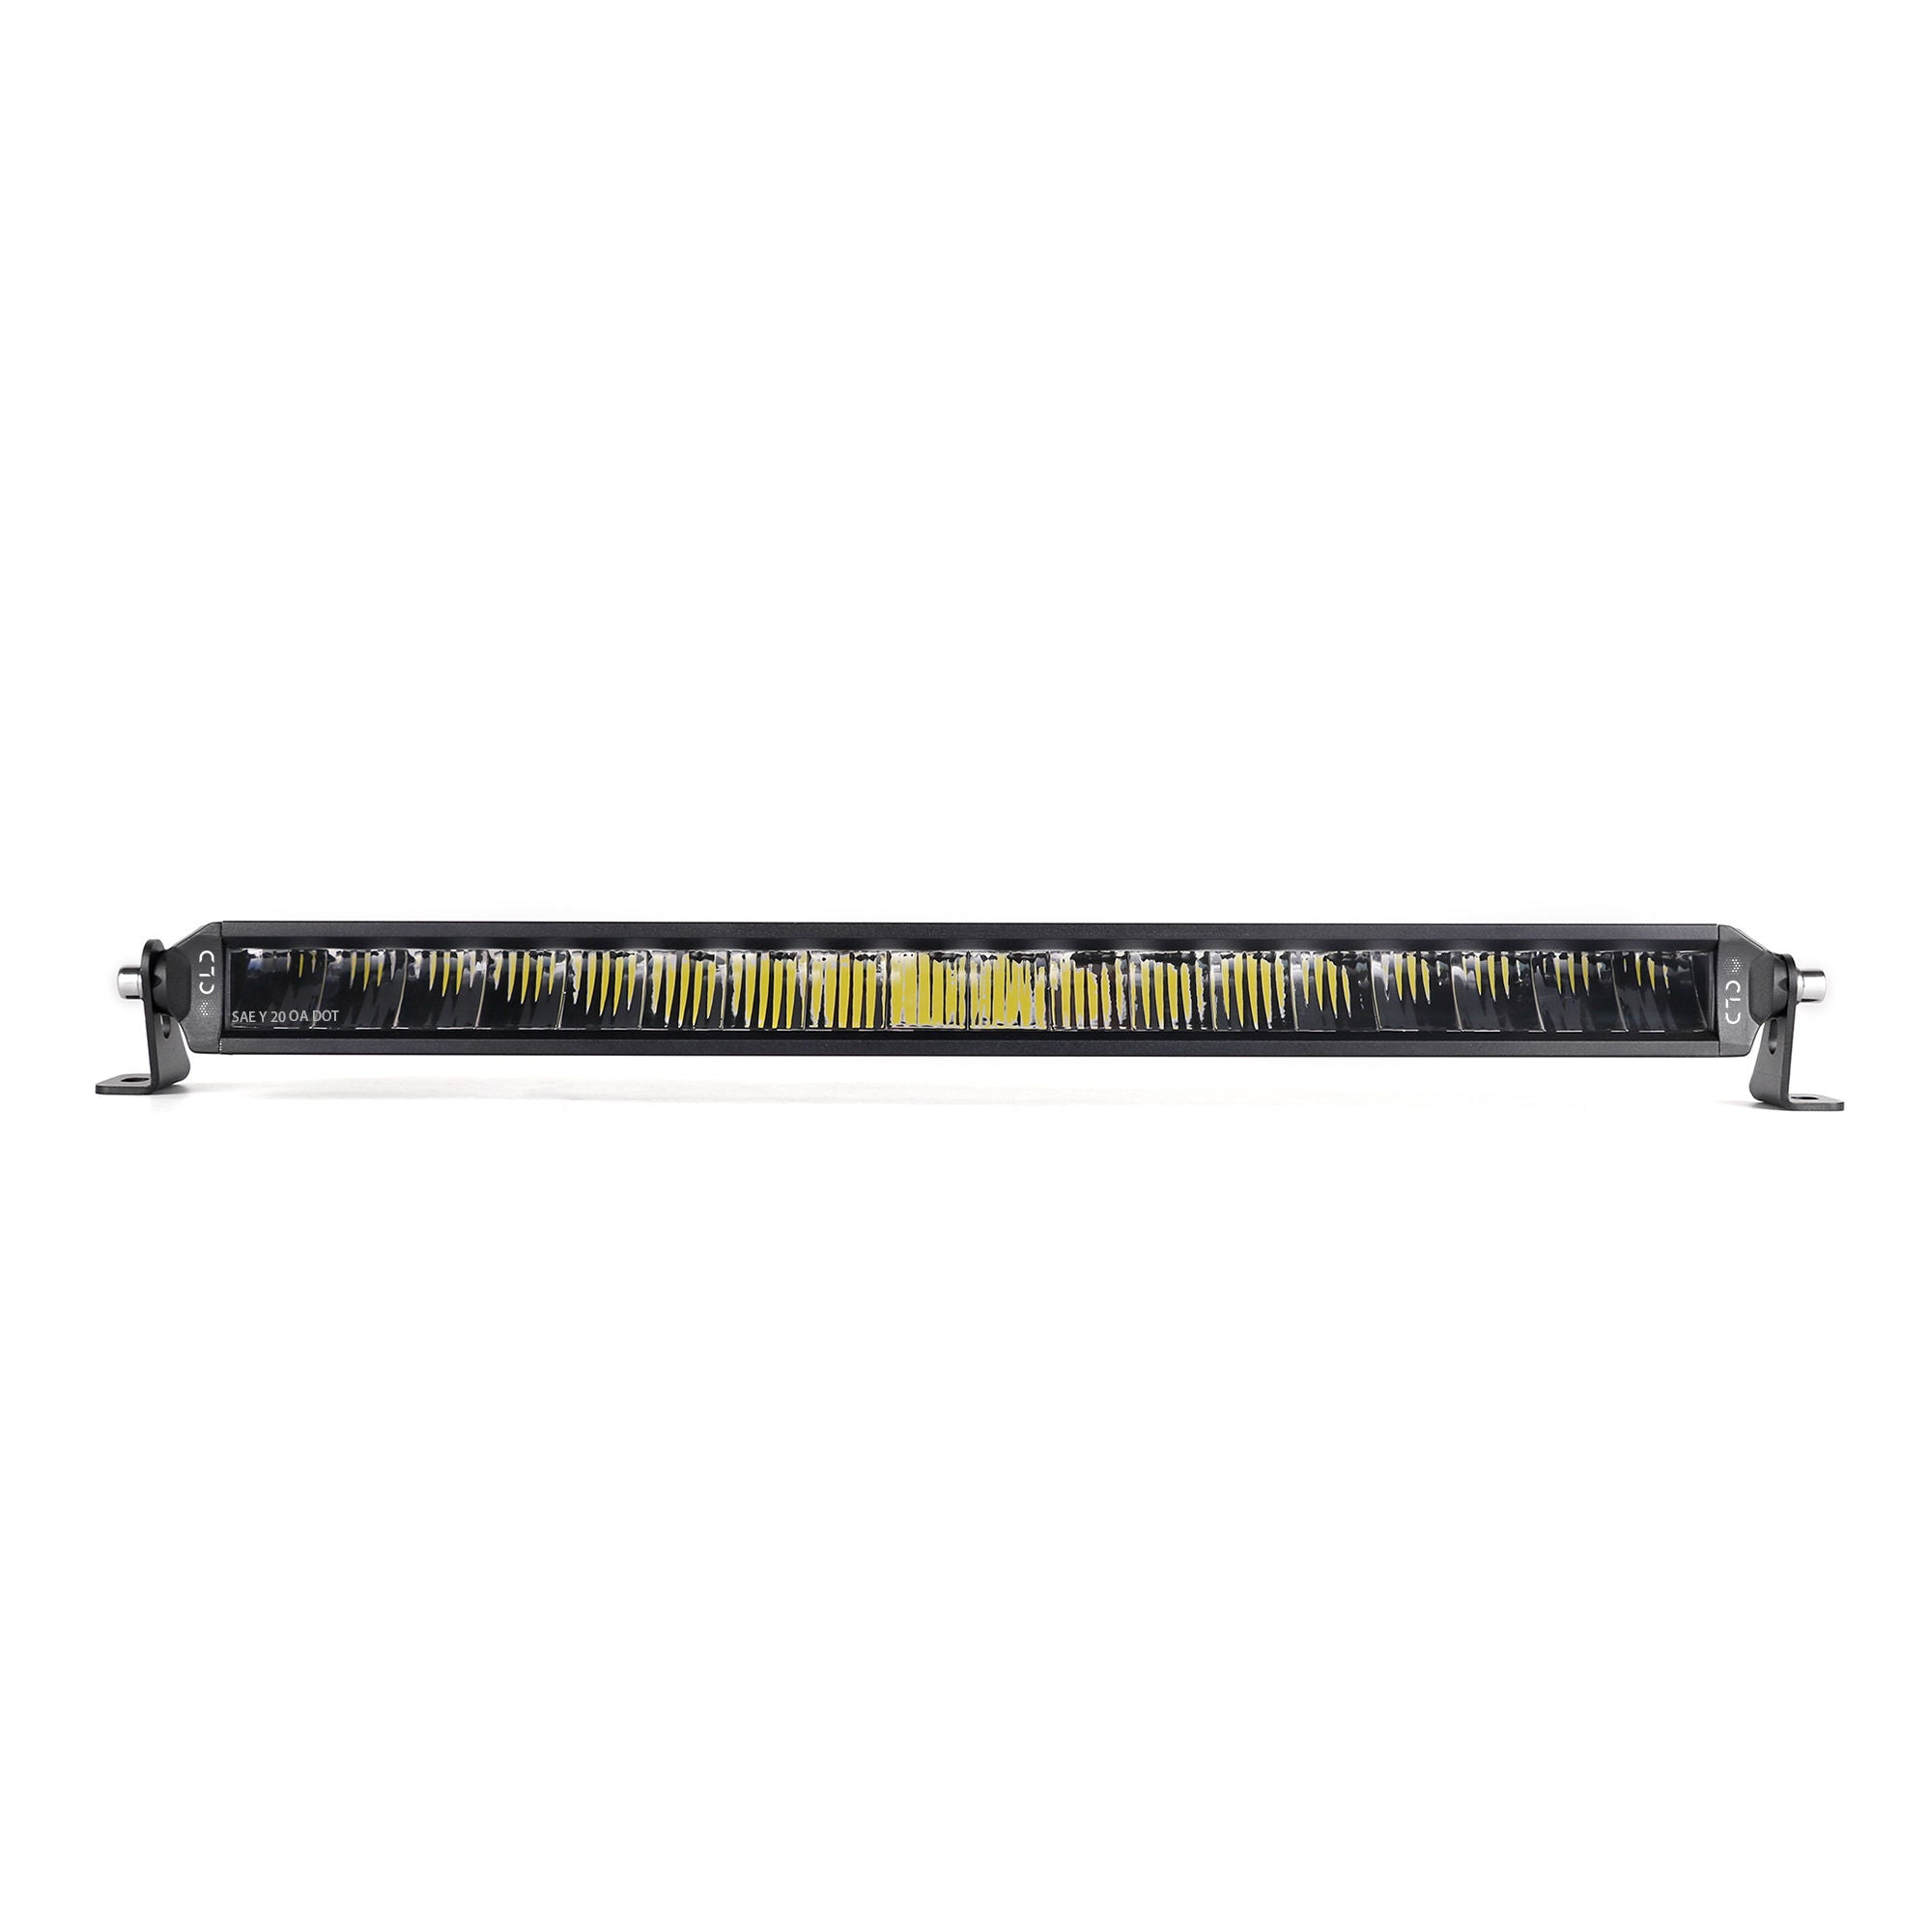 CLD CLDBARS20H - 20" Single Row Street Legal LED Light Bar - Auxiliary High Beam - 6898 Lumens